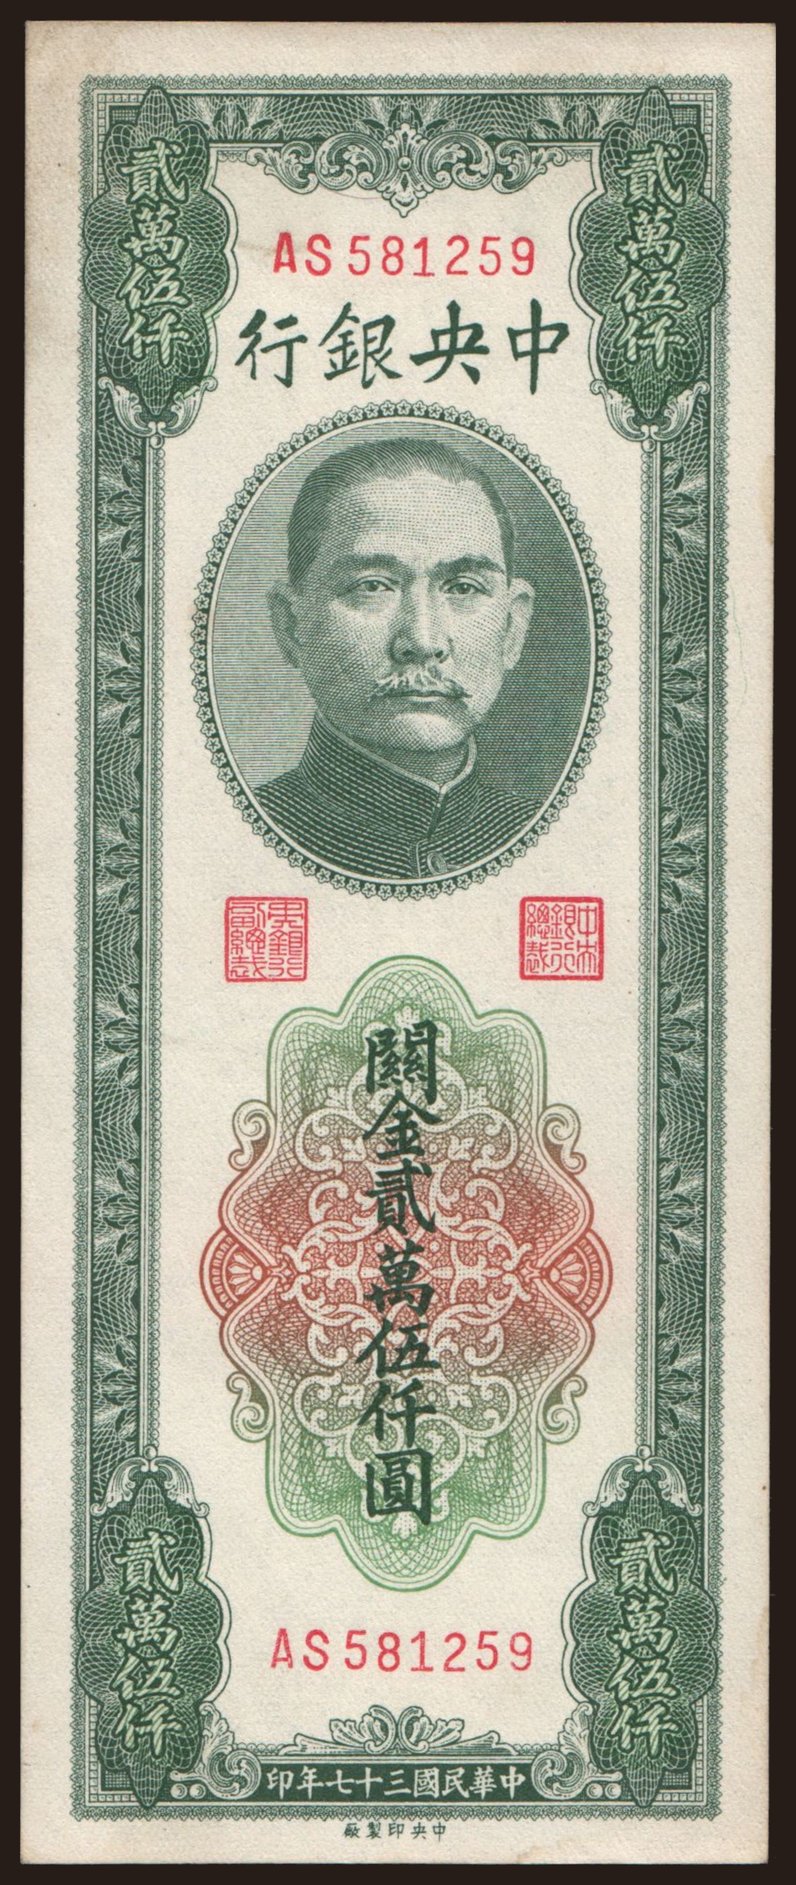 Central Bank of China, 25.000 gold units, 1948